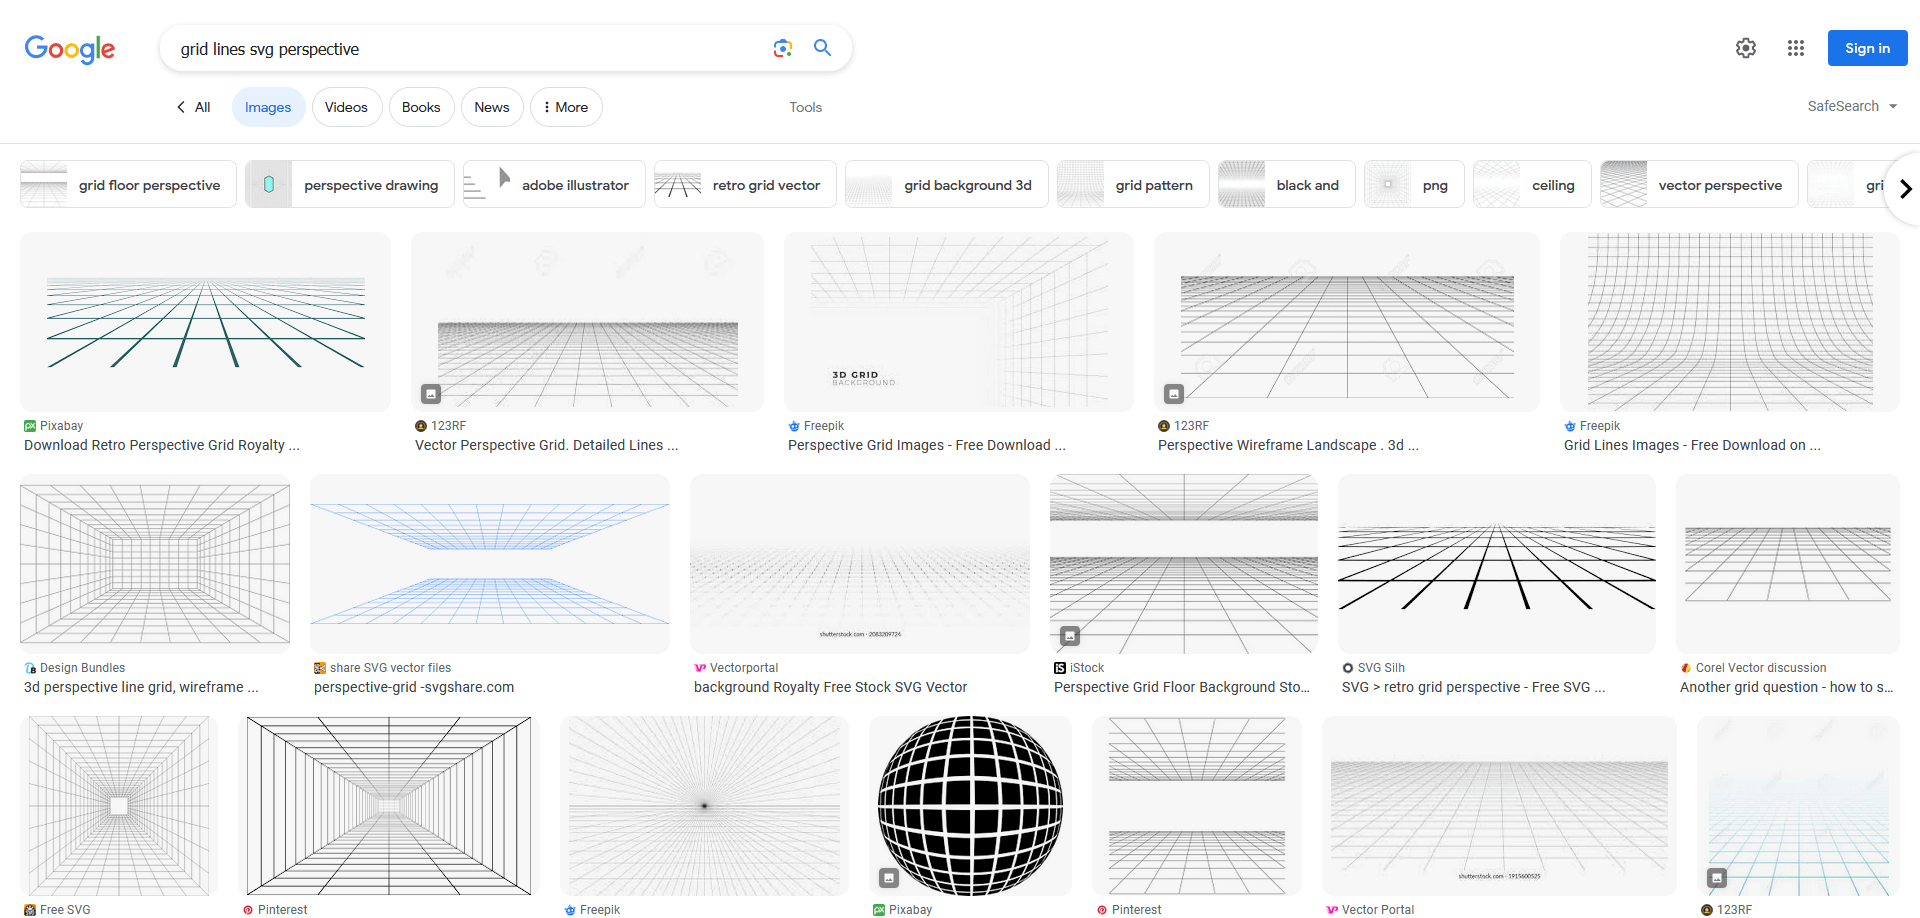 grid lines svg perspective - google